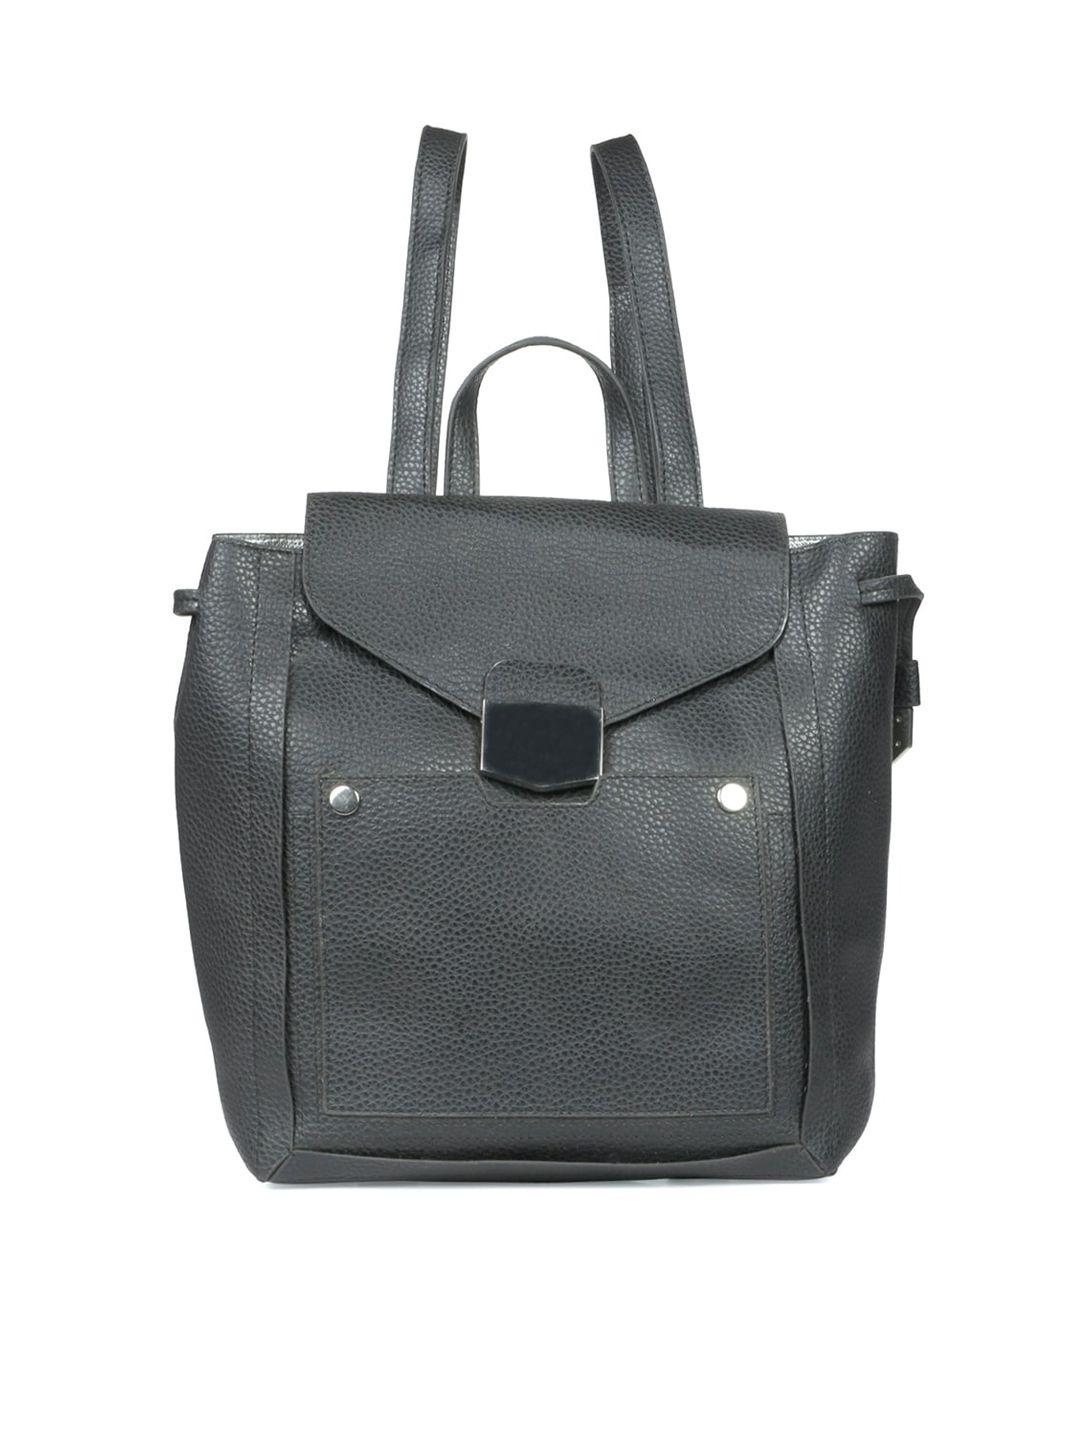 saint g leather oversized satchel backpack bag